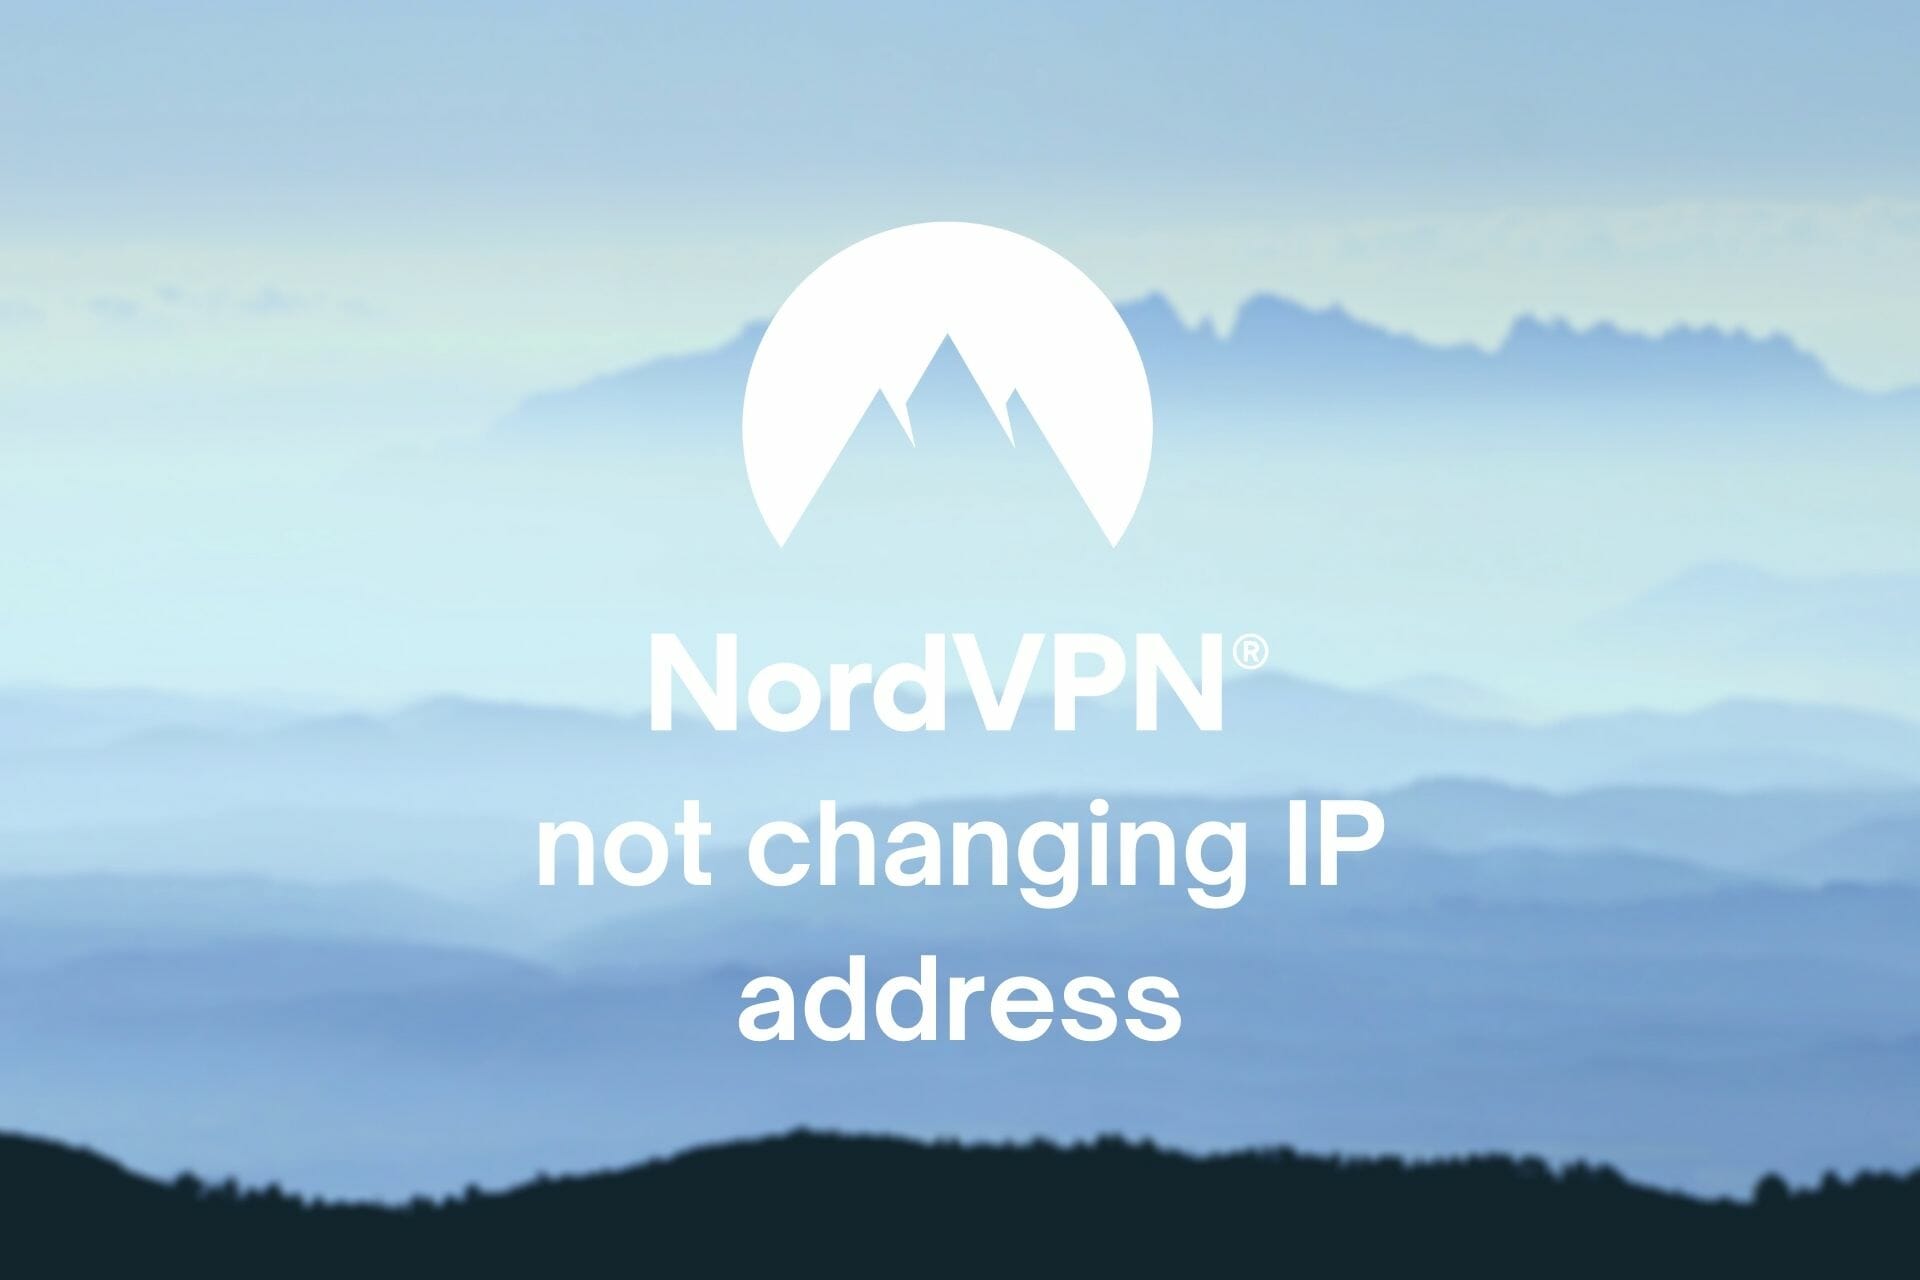 nordvpn assigning ip address stuck